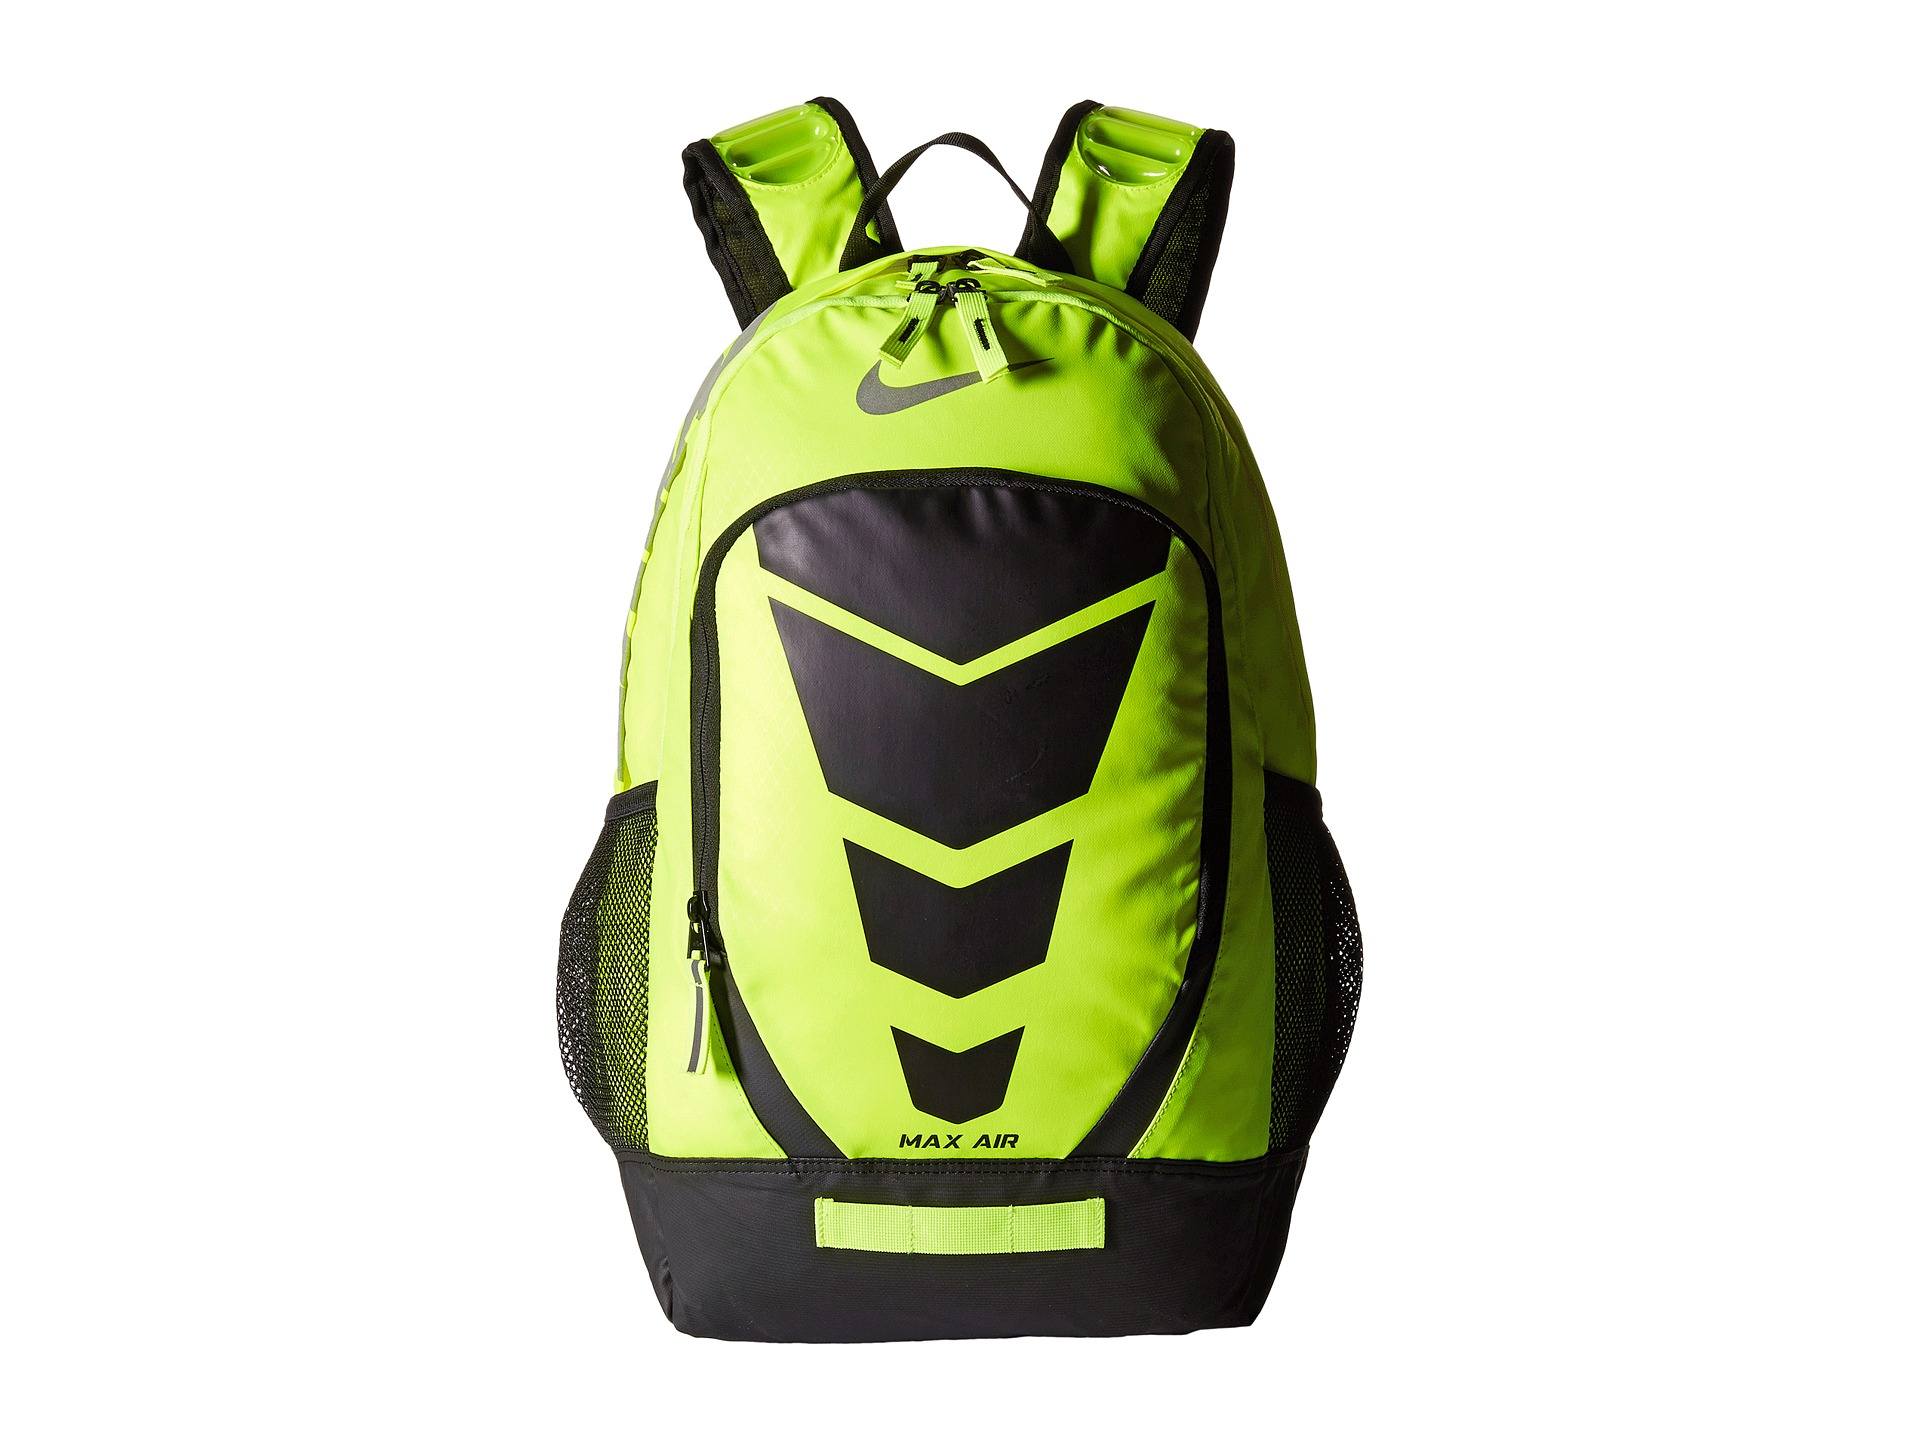 nike vapor max air backpack green and yellow